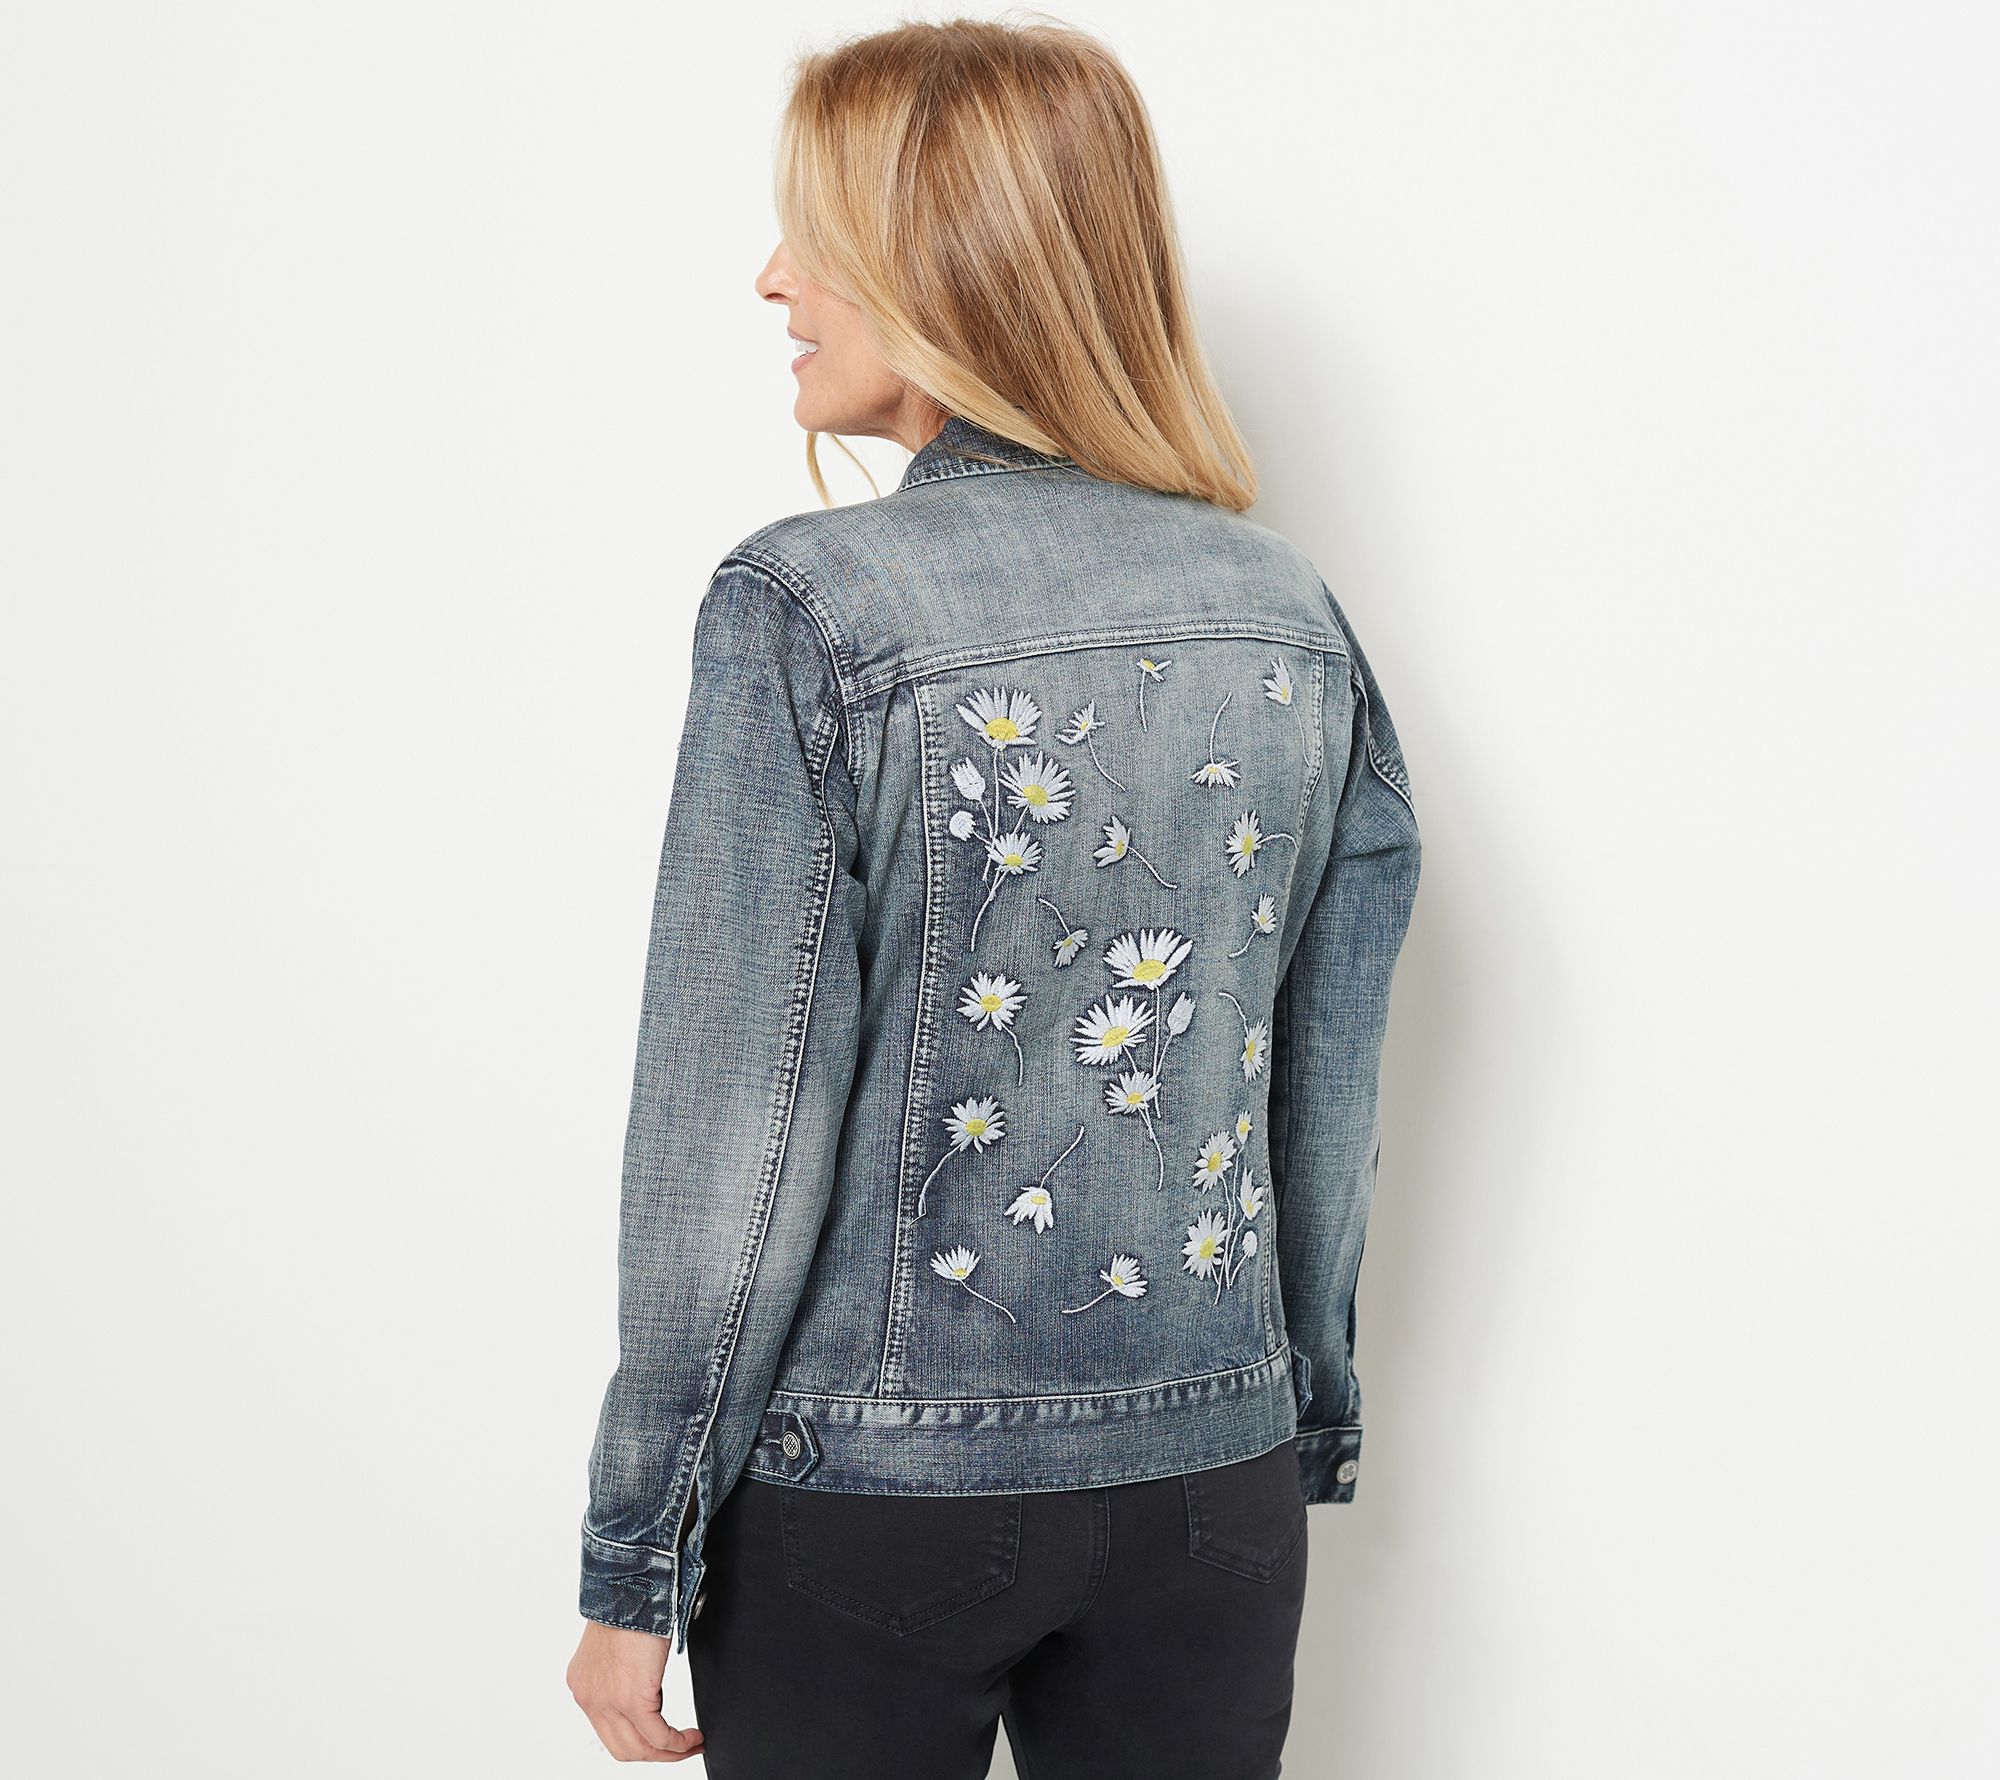 Laurie Felt Classic Denim Embroidered Jacket Jacket 